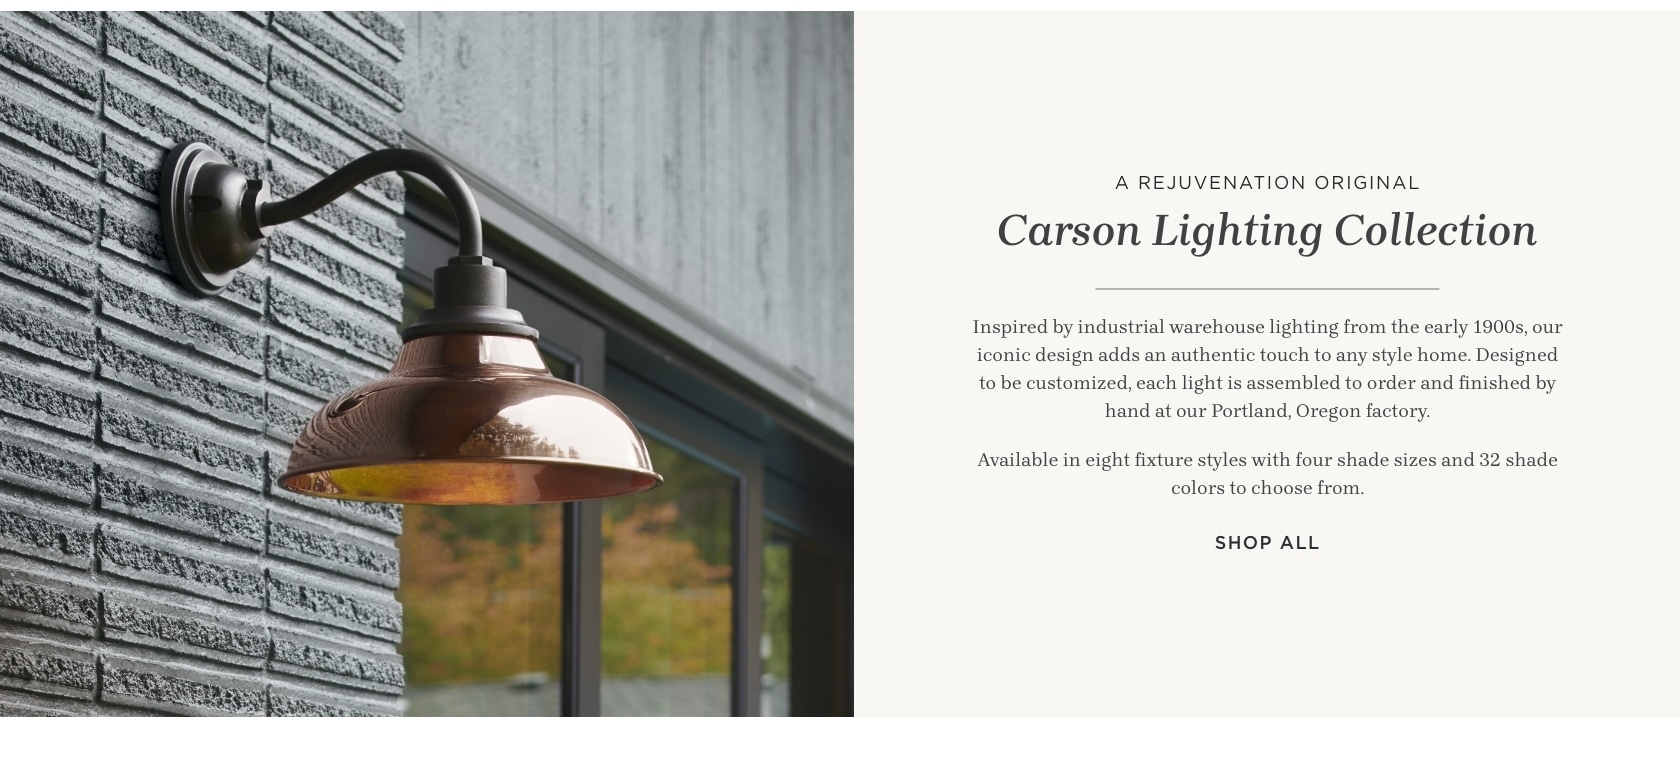 Carson Lighting Collection